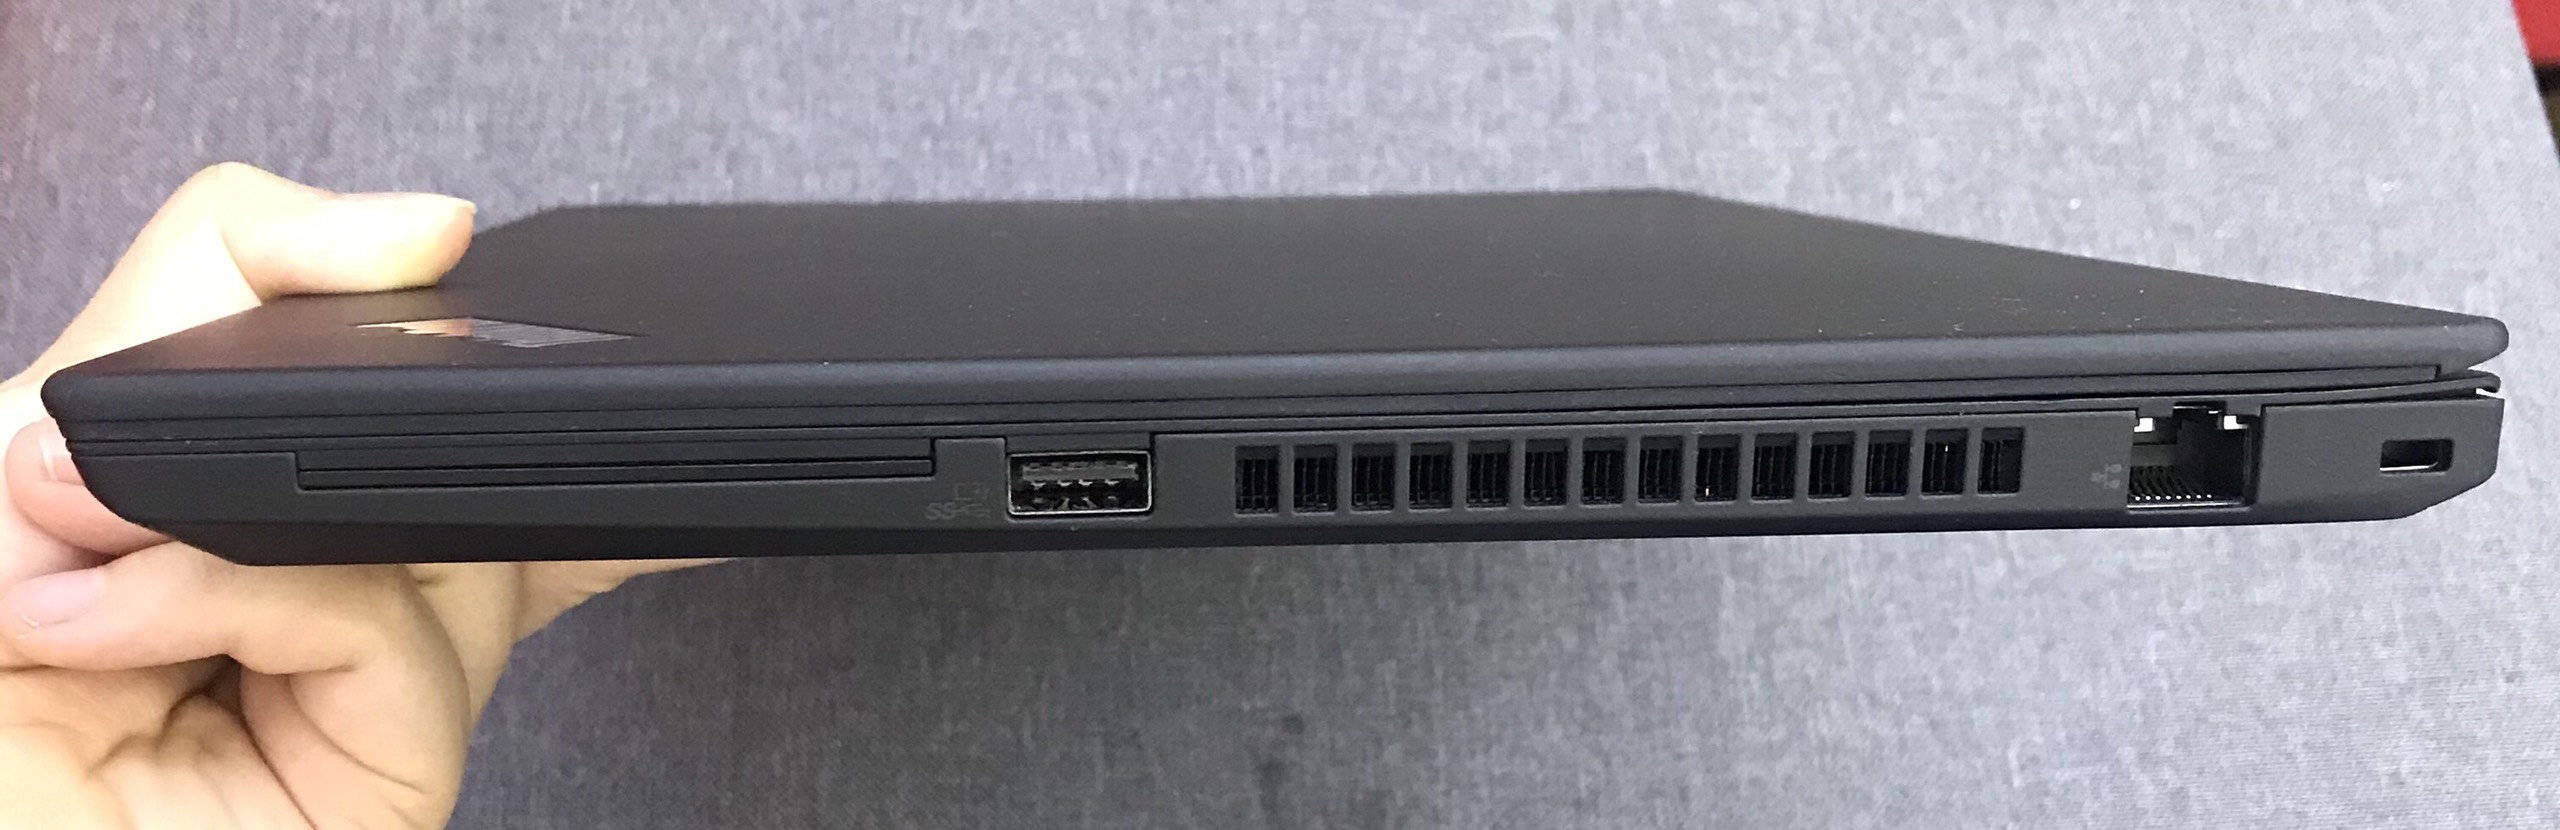 Lenovo Thinkpad T490 i7 Ultrabook mỏng nhẹ VGA rời